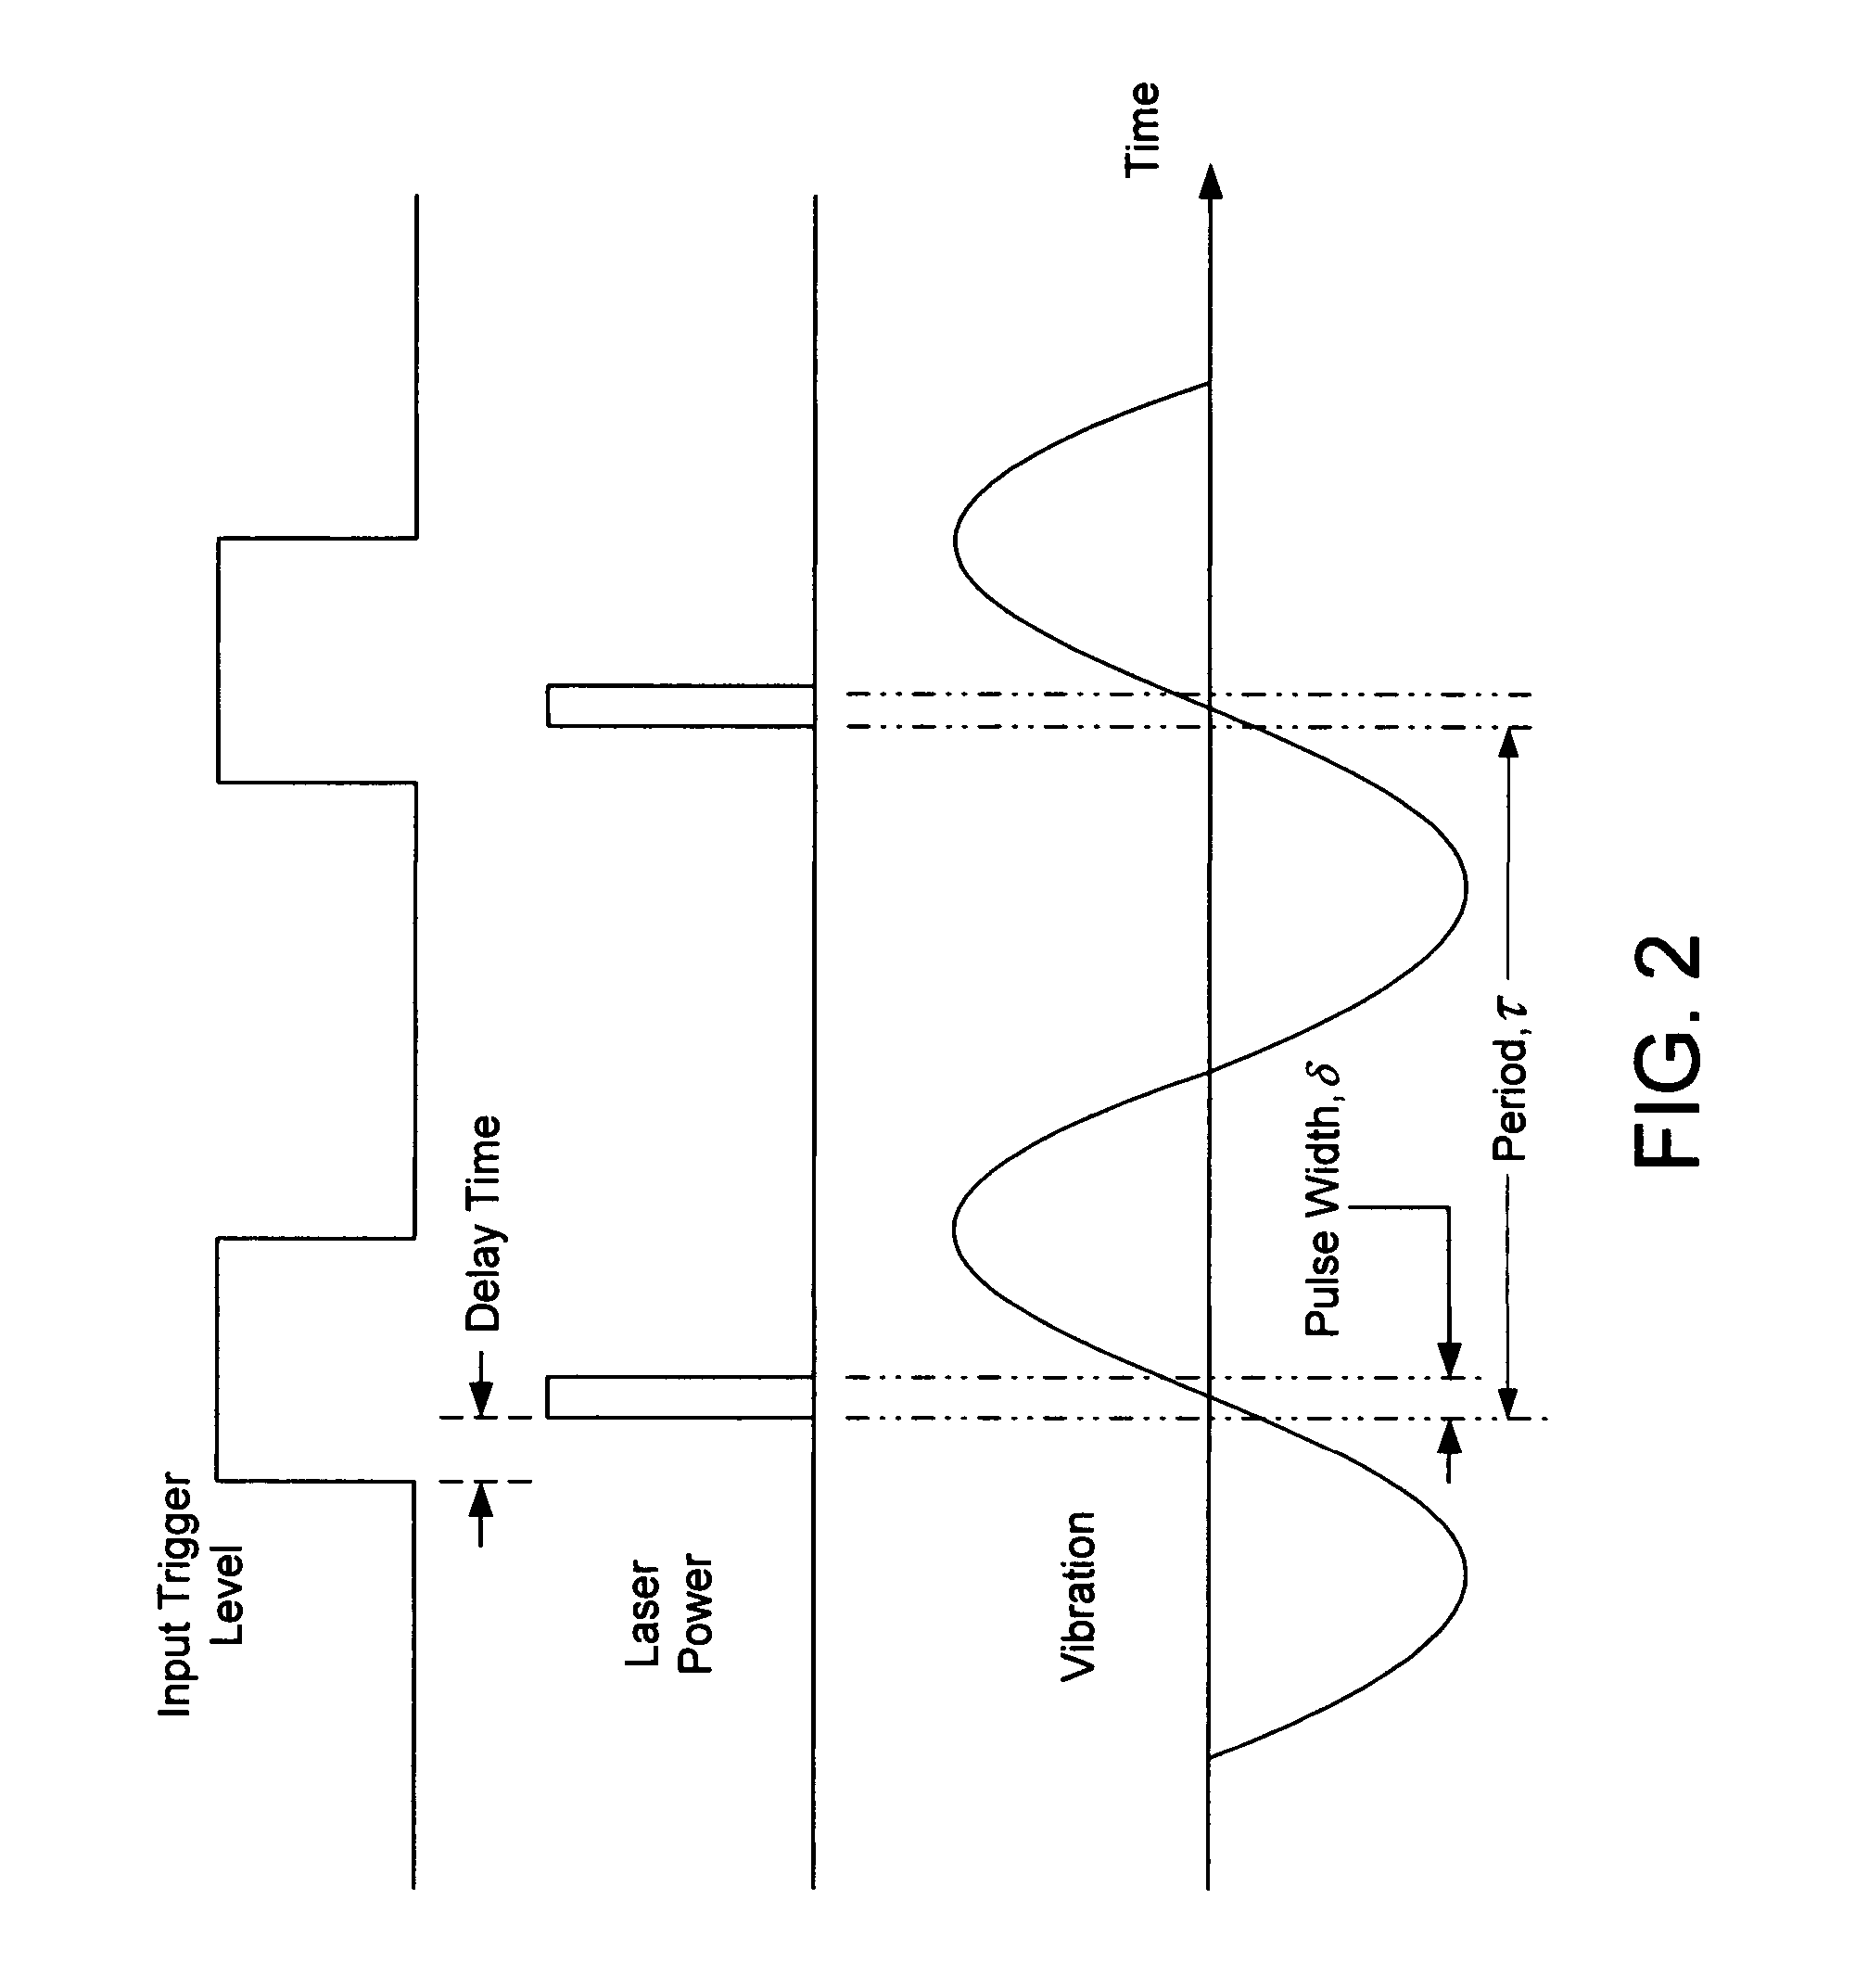 Stroboscopic interferometry with frequency domain analysis